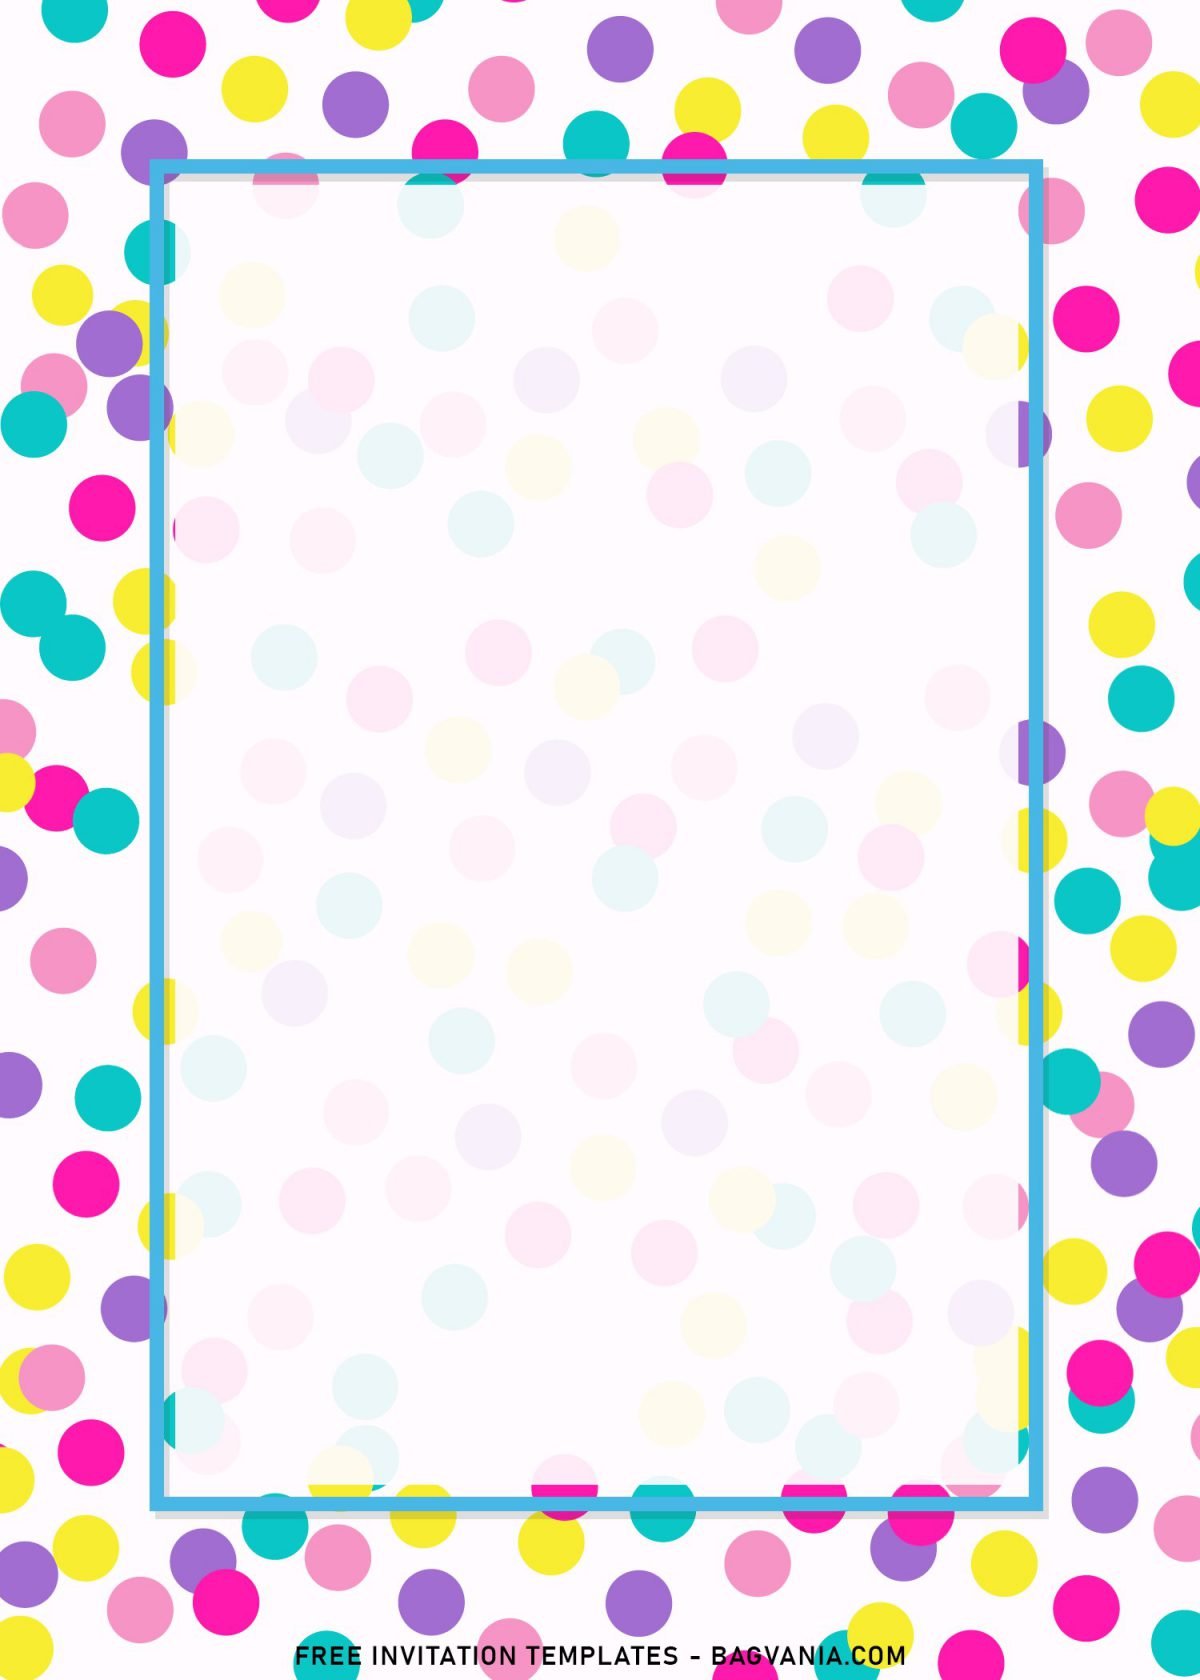 7+ Colorful Confetti Birthday Invitation Templates with white rectangle text box